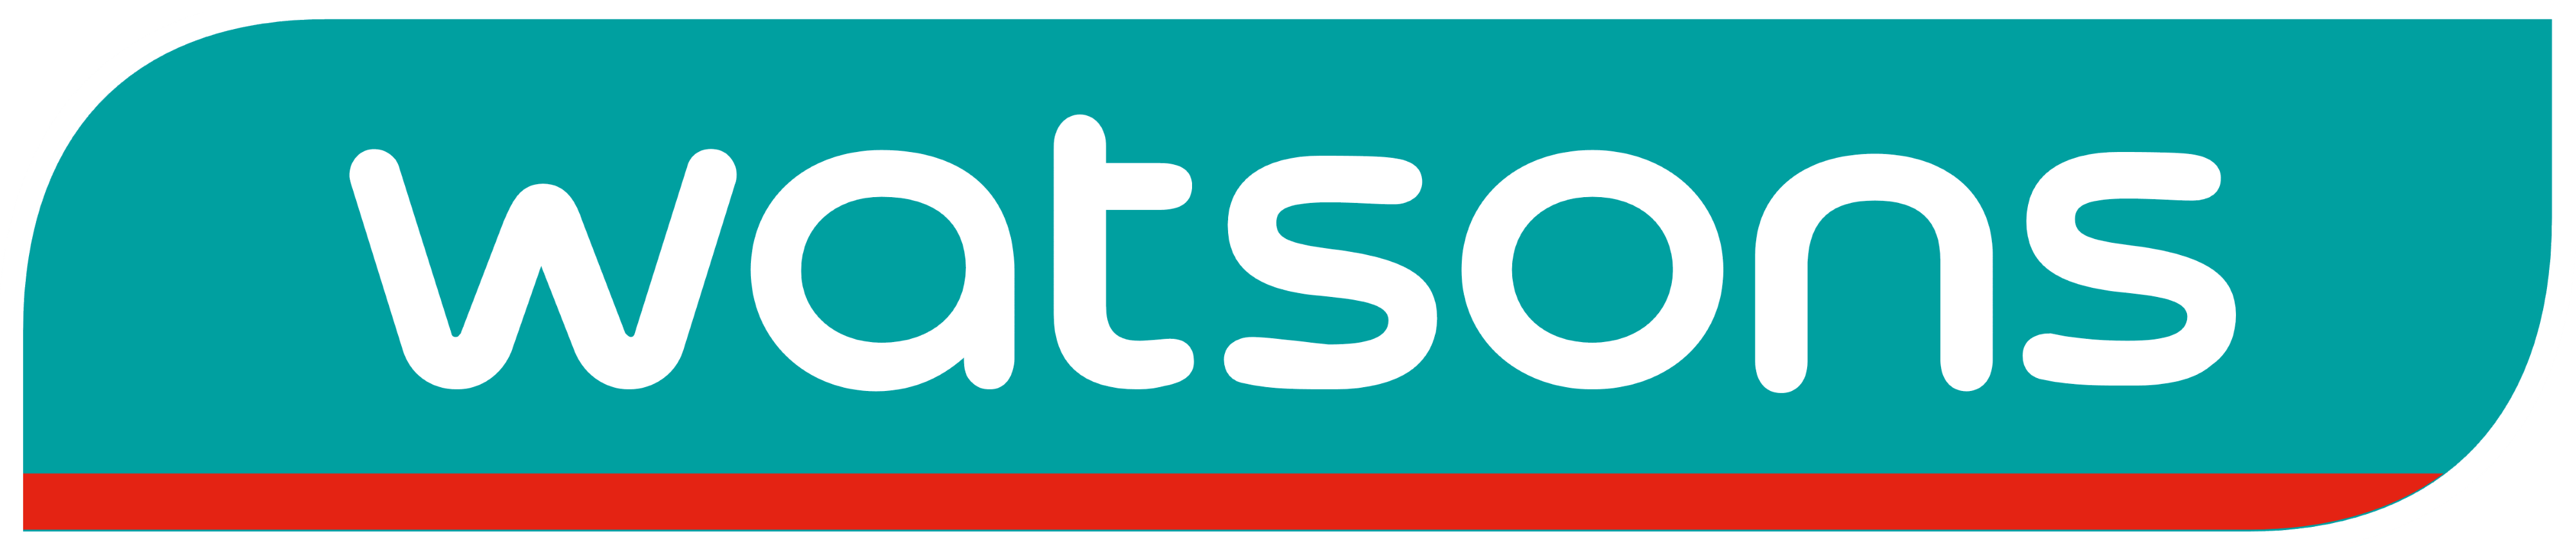 Watsons logo, logotype